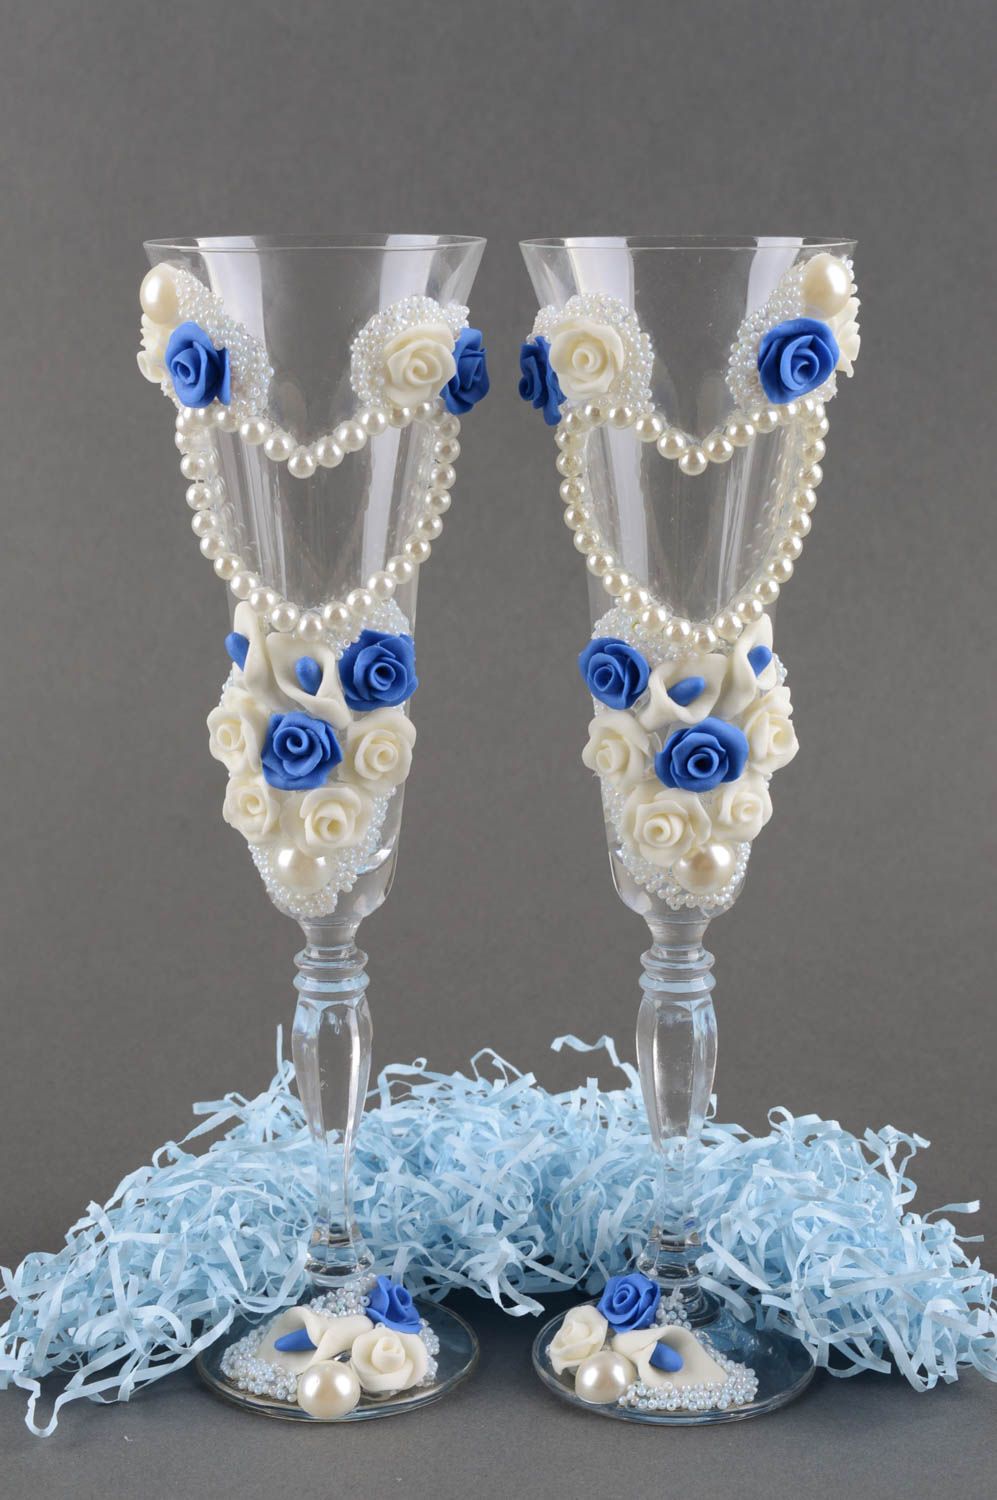 Wedding champagne glasses handmade decorative wine glasses wedding gift ideas photo 1